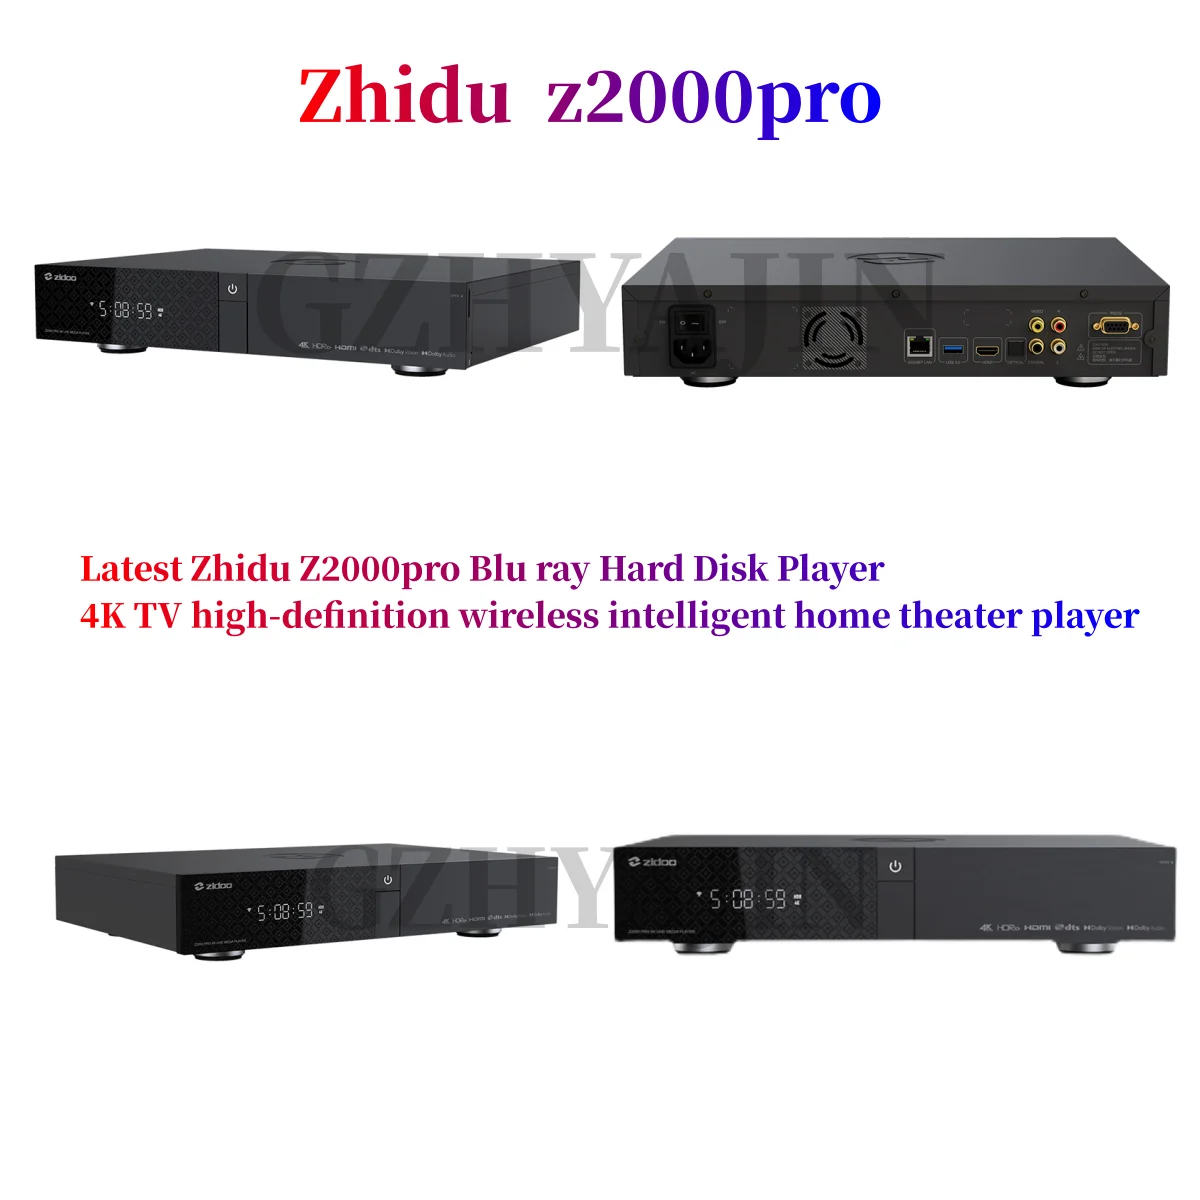 

Latest Zhidu Z2000pro Blu ray Hard Disk Player 4K TV HD Wireless Intelligent Home Theater Player